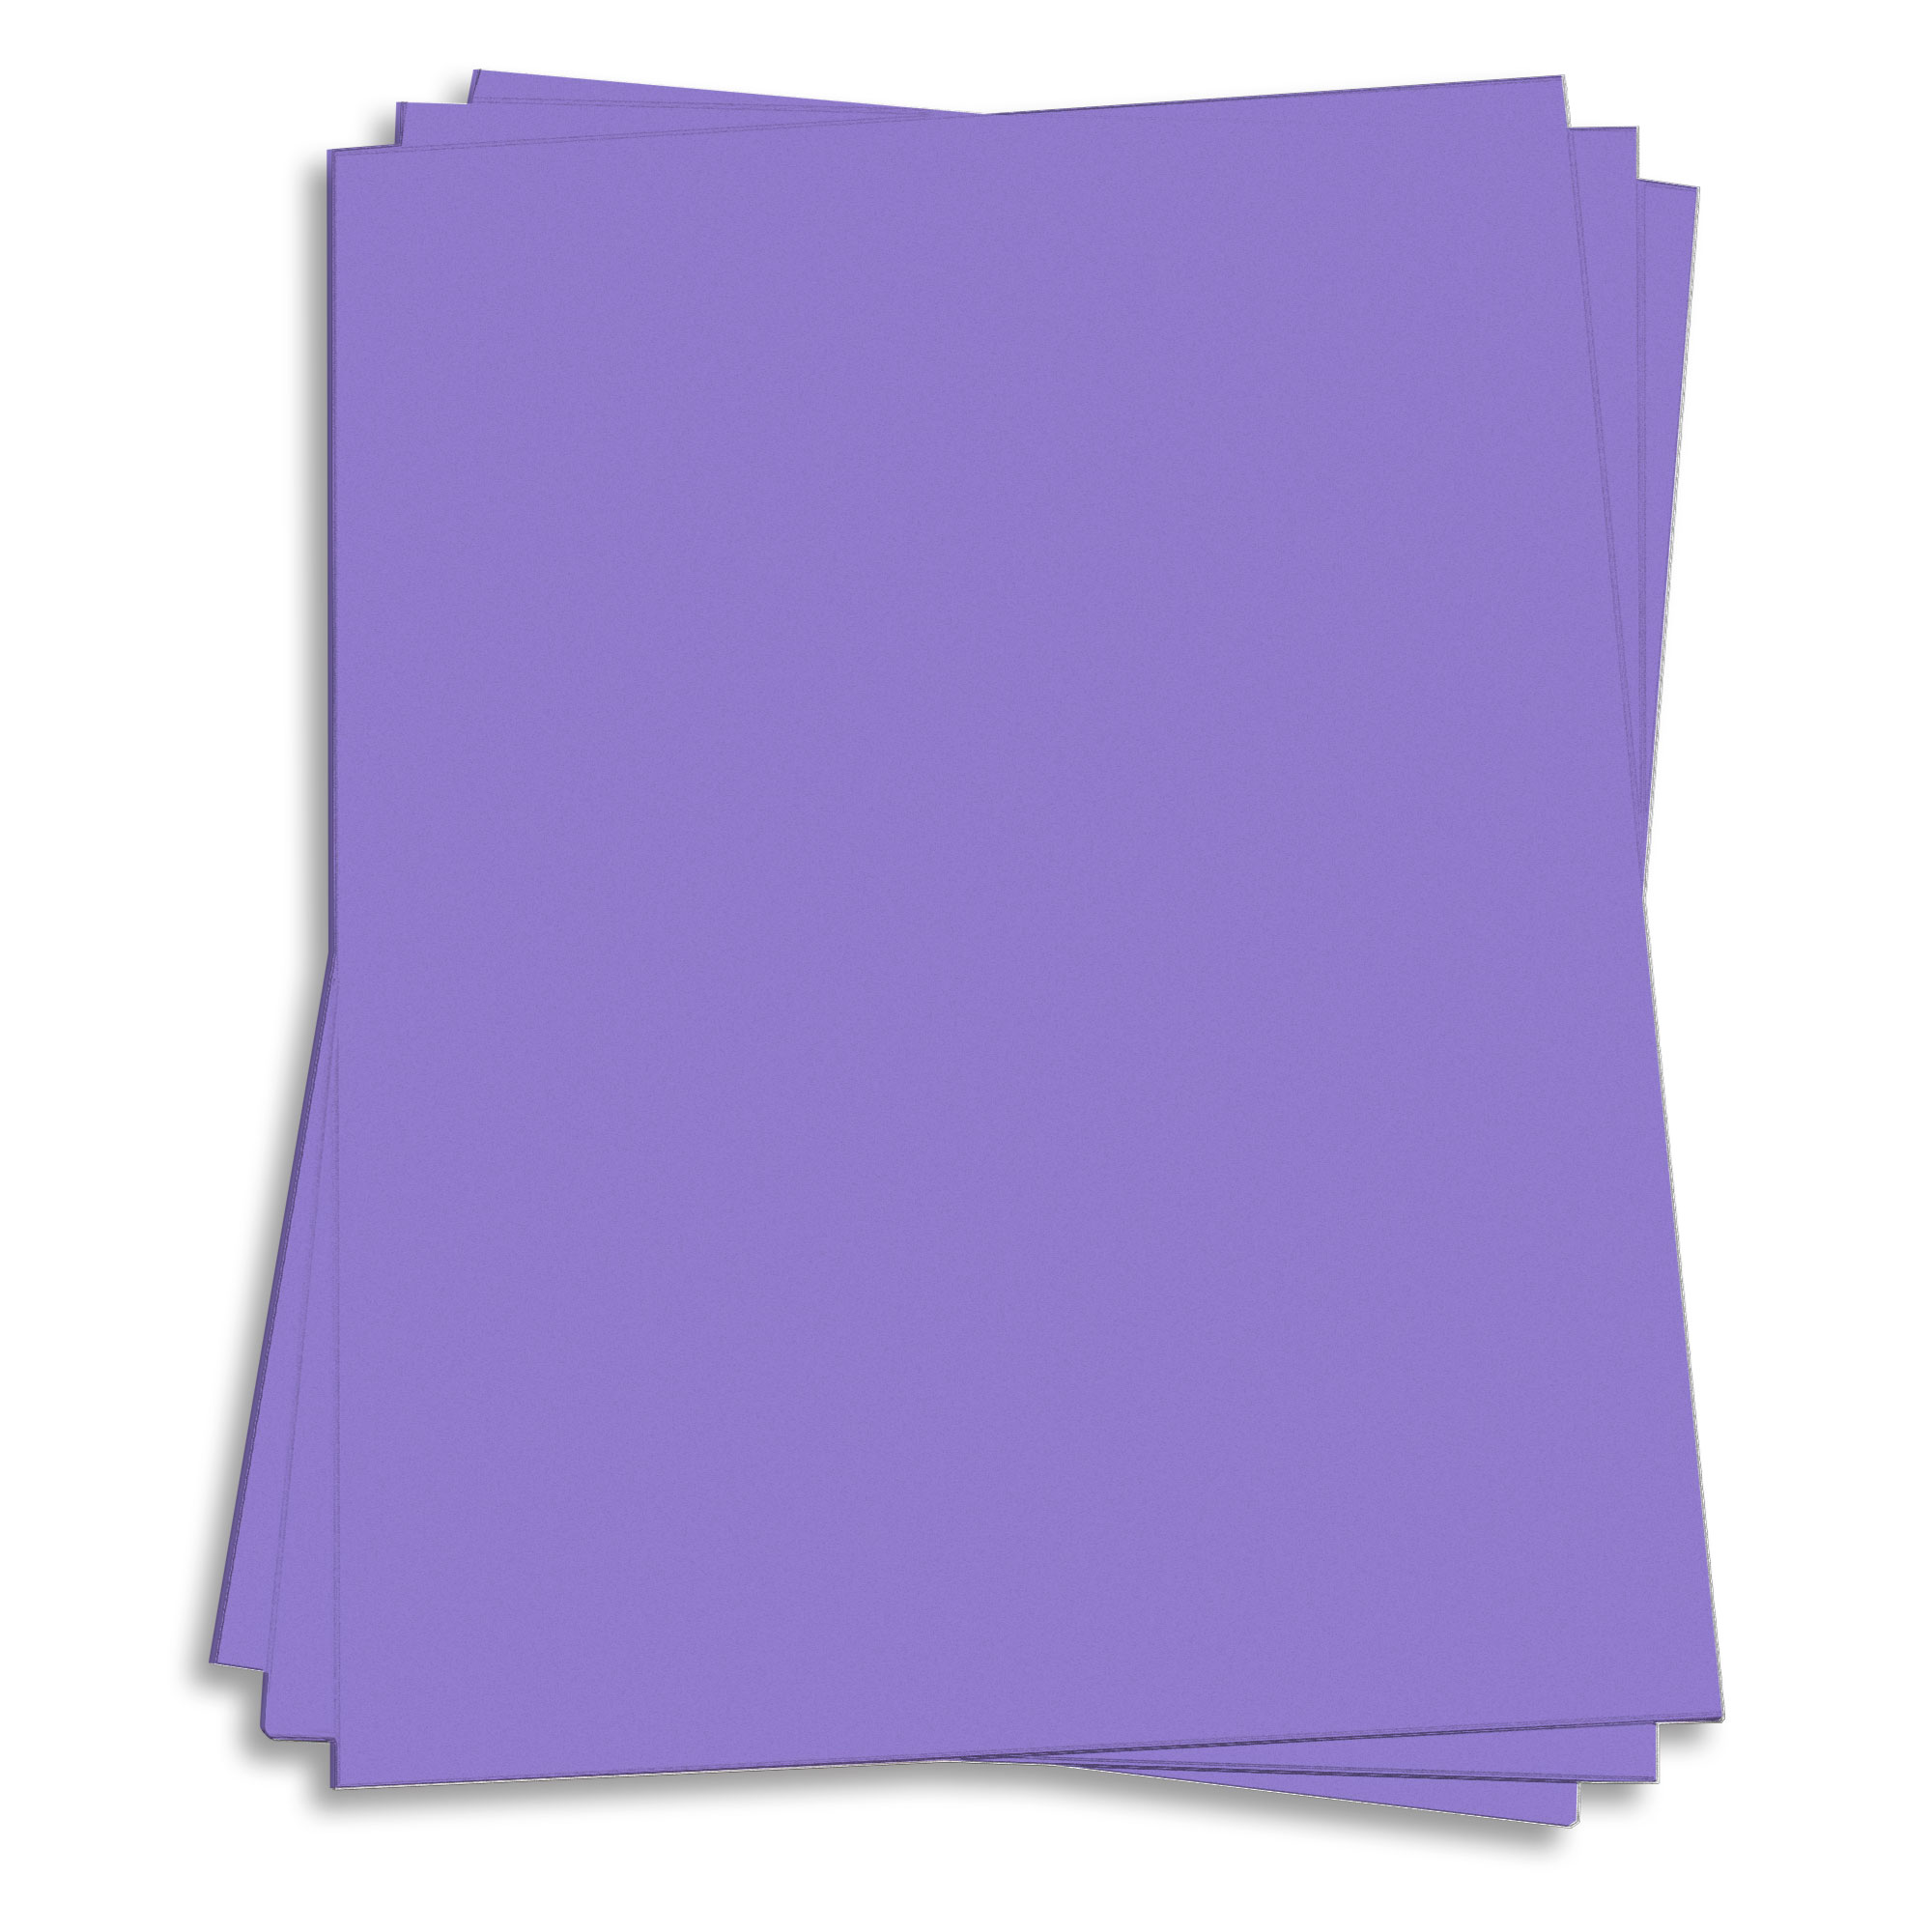 Venus Violet Purple Card Stock - 8 1/2 x 11 65lb Cover